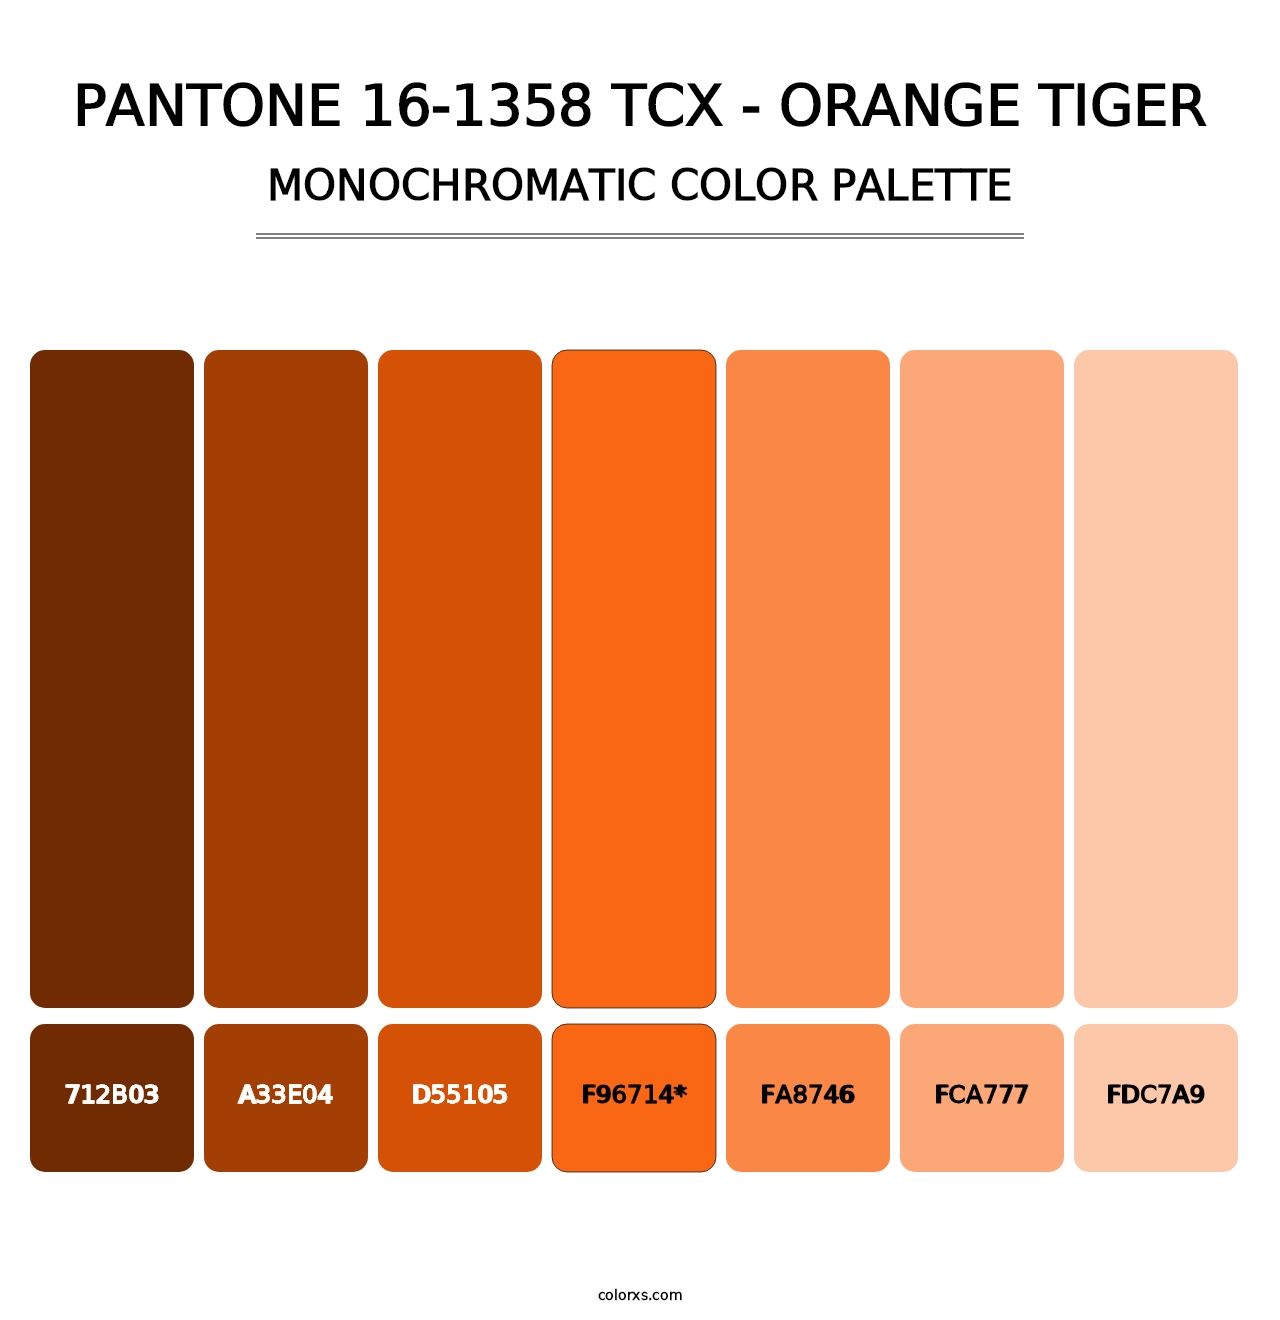 PANTONE 16-1358 TCX - Orange Tiger - Monochromatic Color Palette